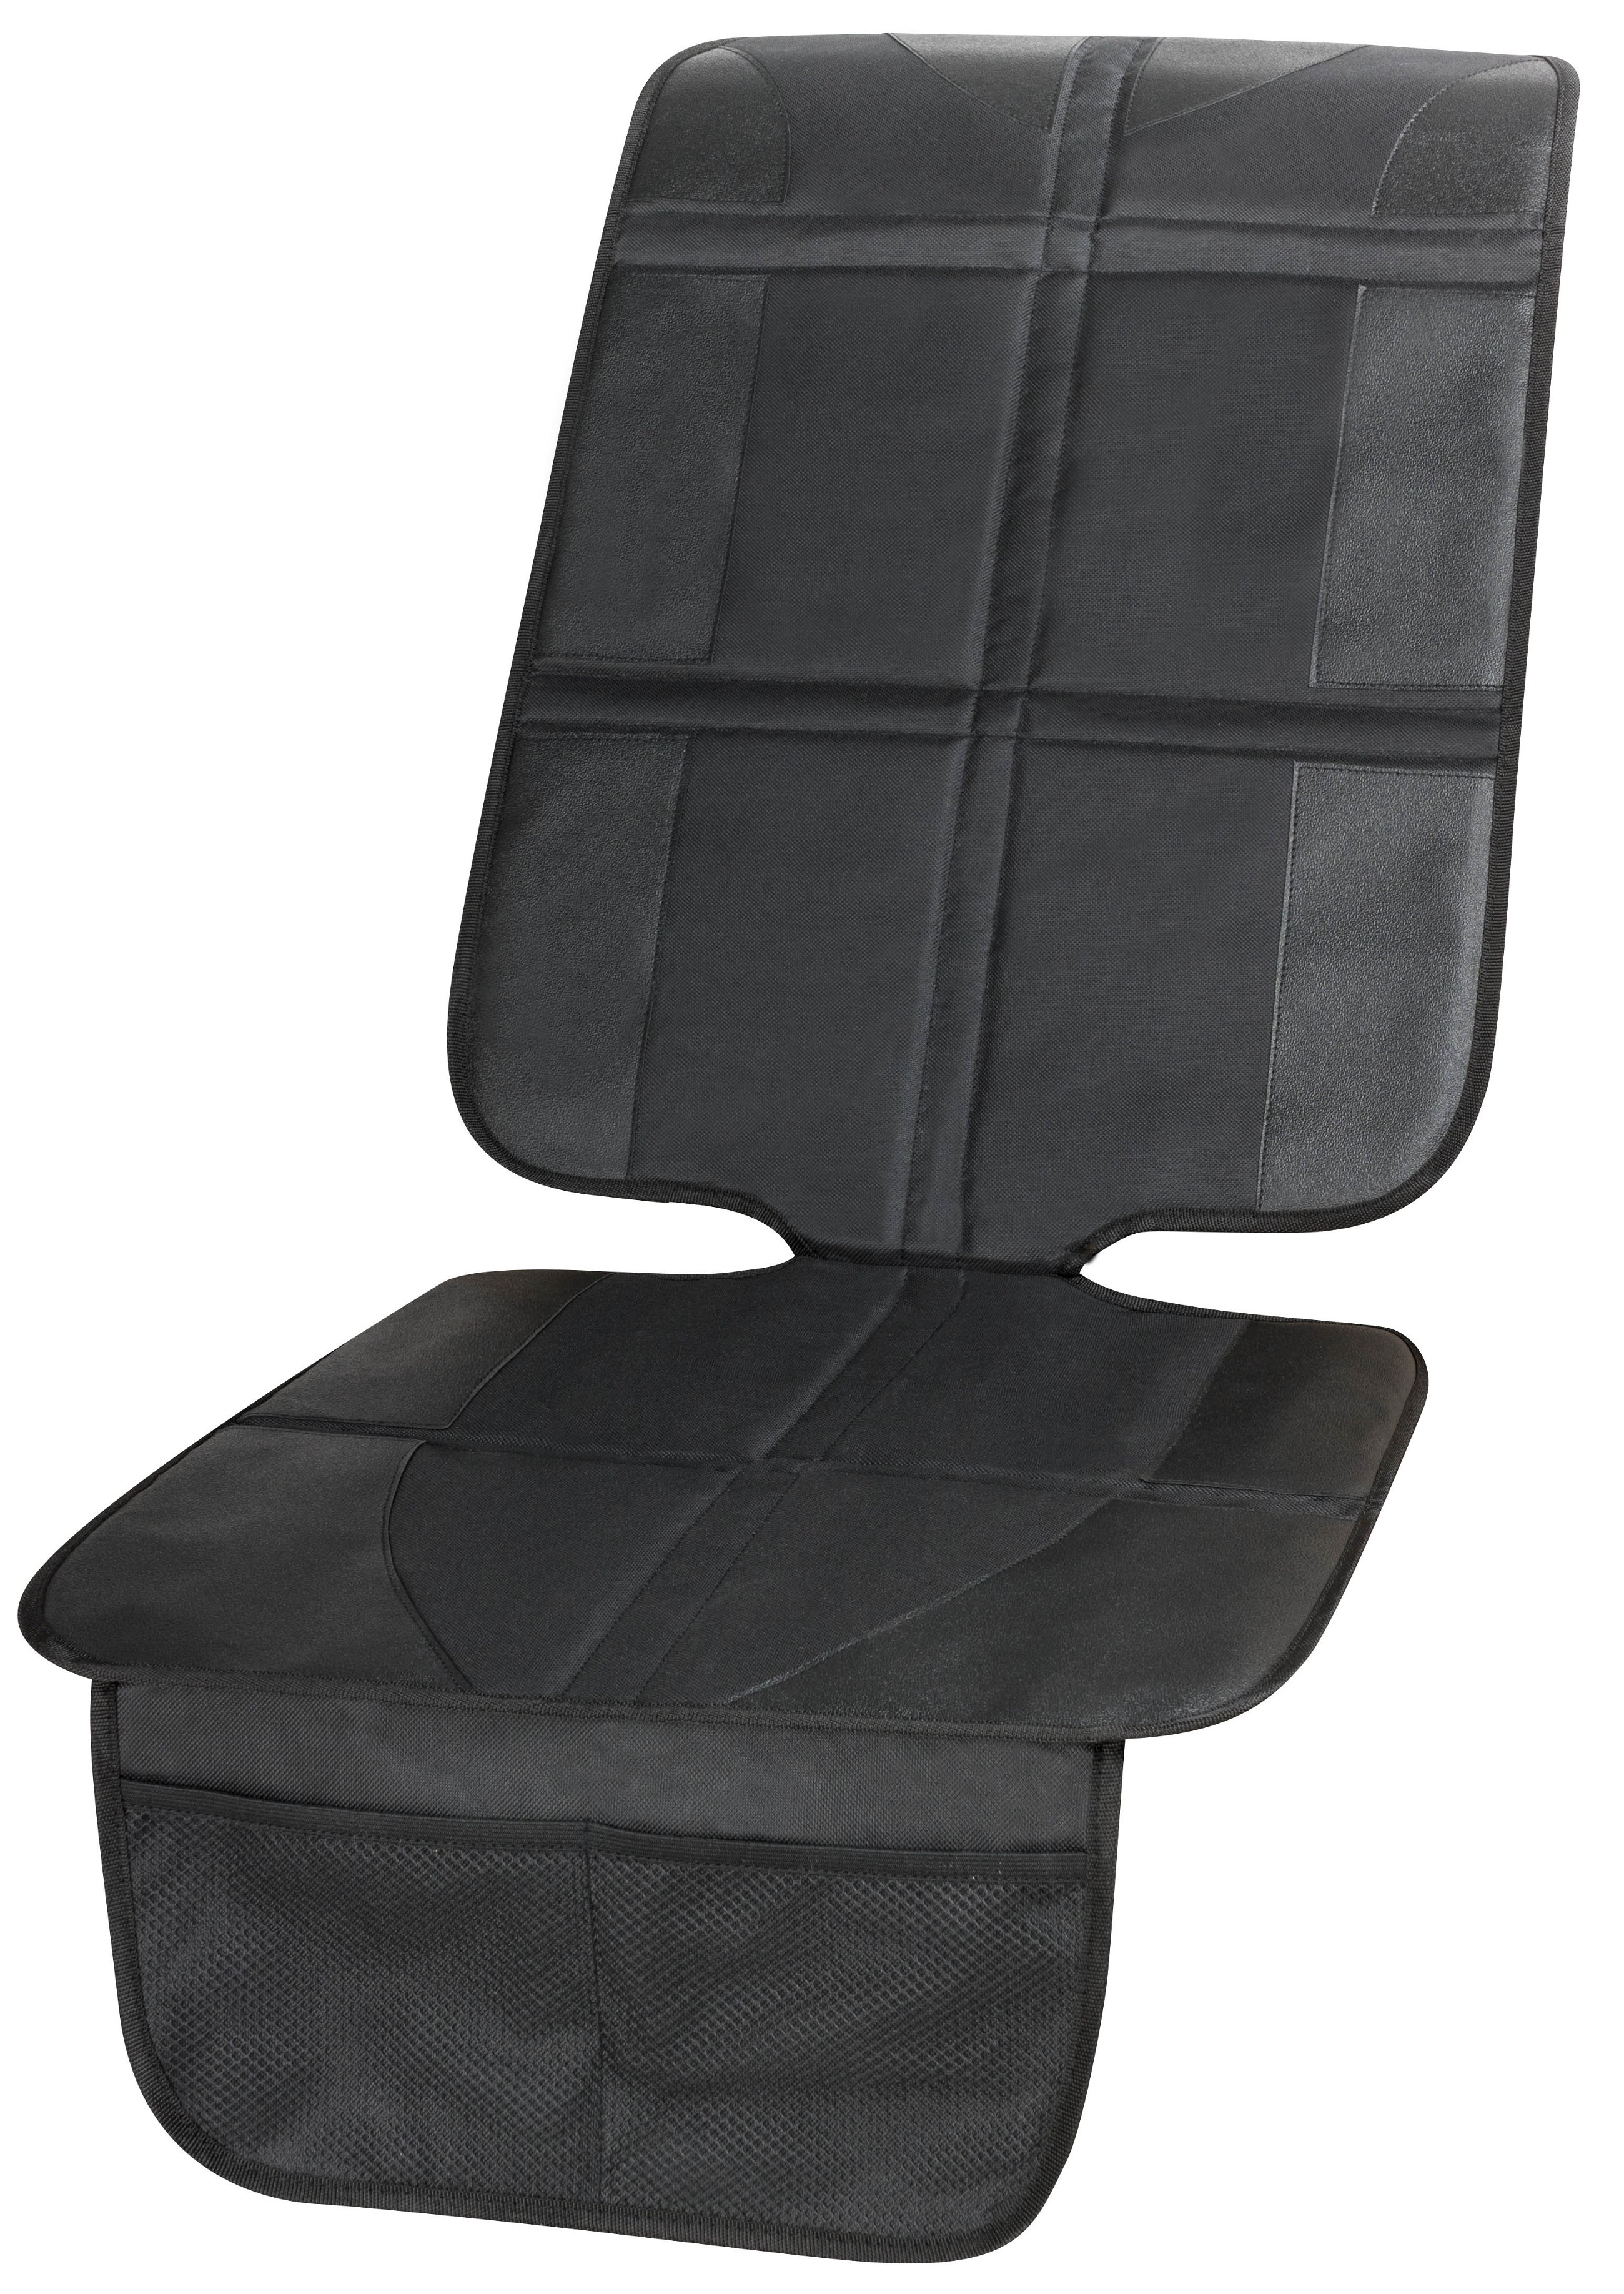 Child seat pad George Premium XL, protective pad child seat black